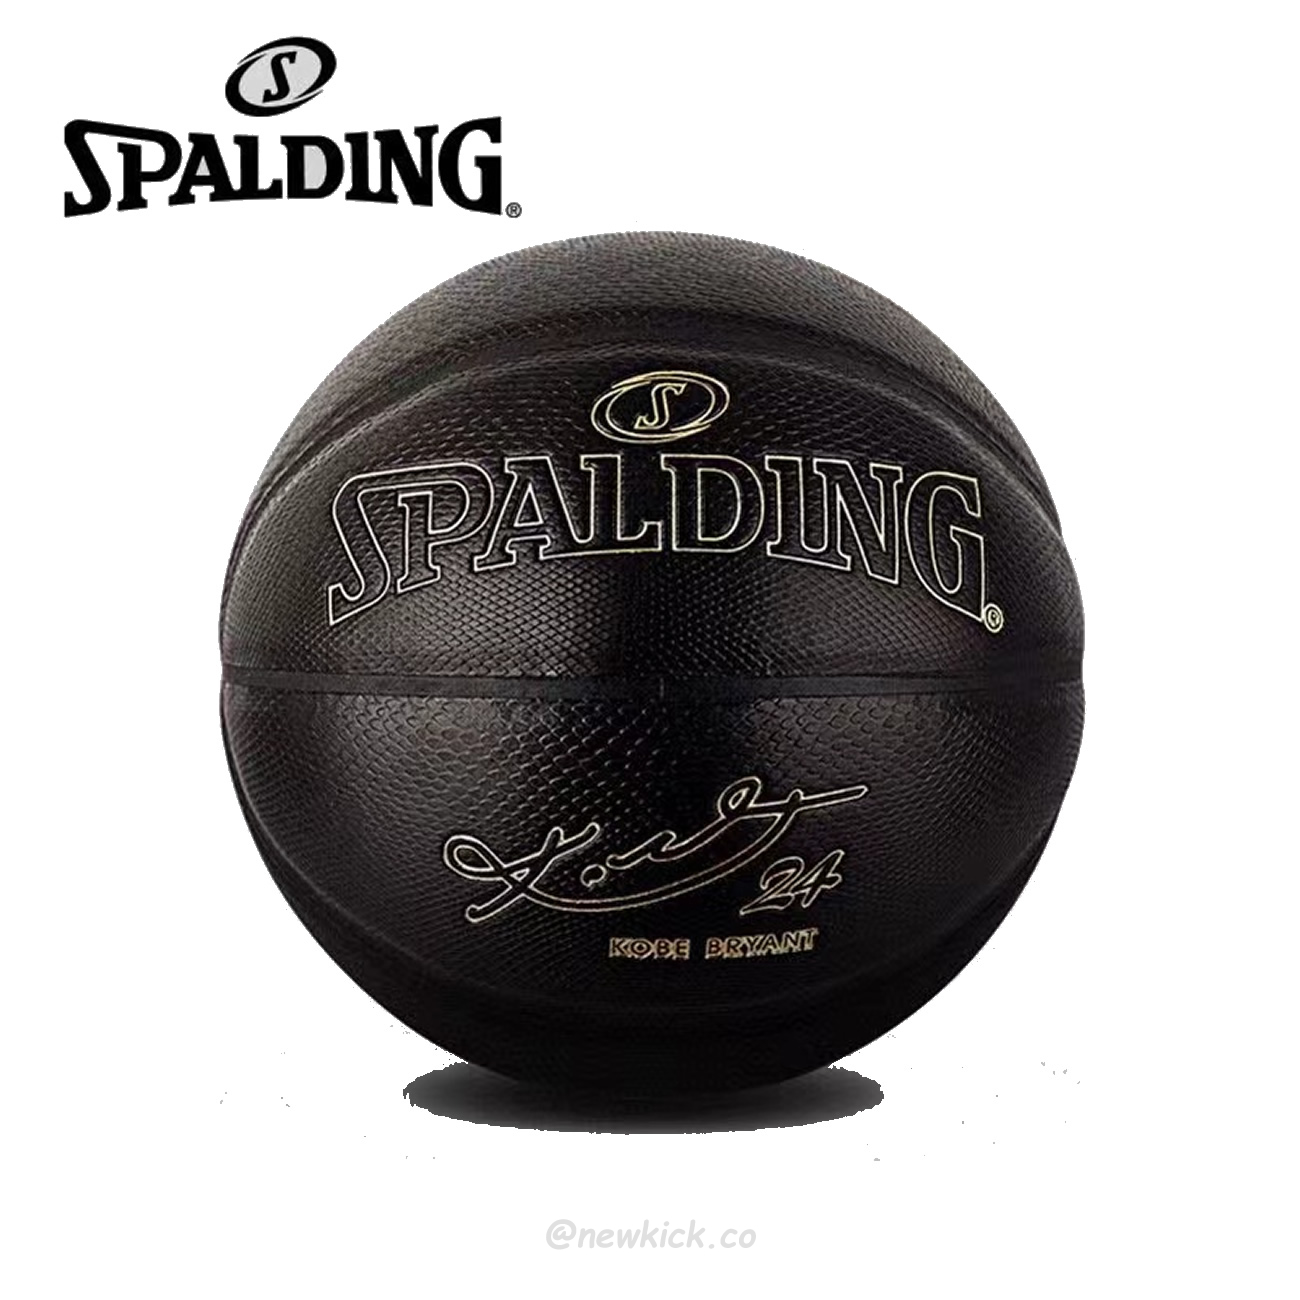 Spalding Kobe Bryant 24k Basketball Black Purple (5) - newkick.org